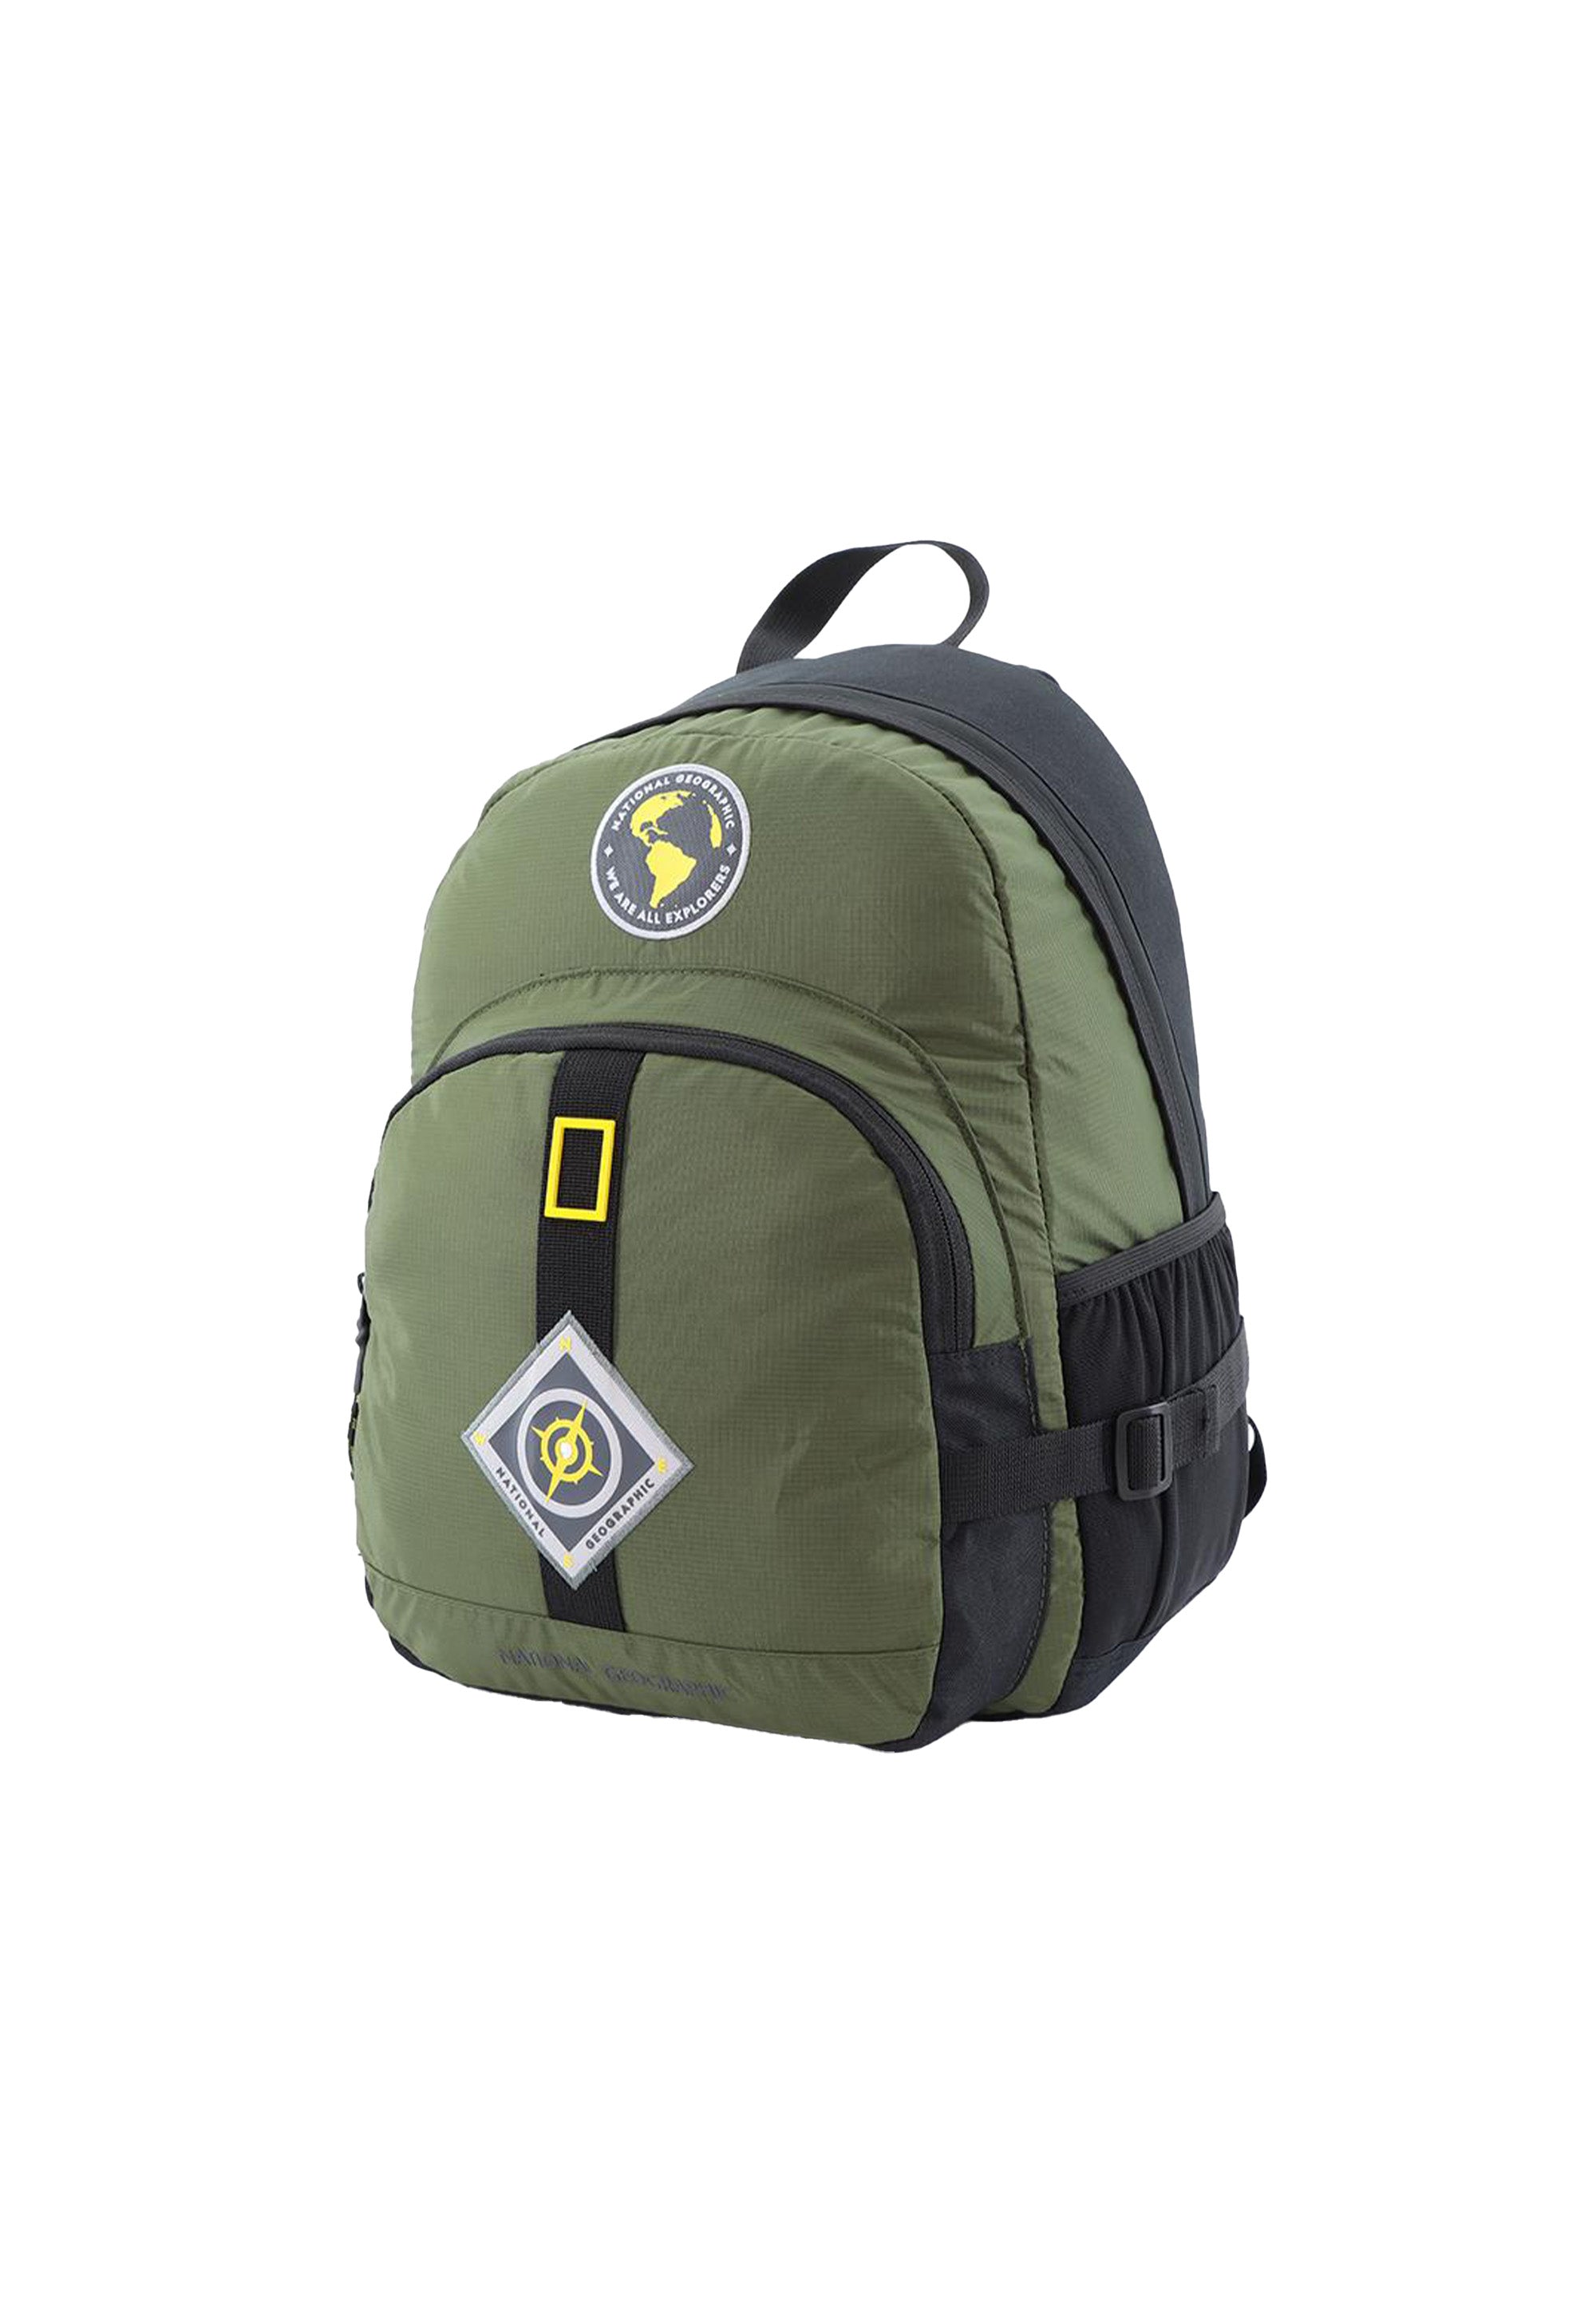 National Geographic - New Explorer Rucksack / Outdoor-Rucksack / Laptop-Rucksack - 18L - Khaki